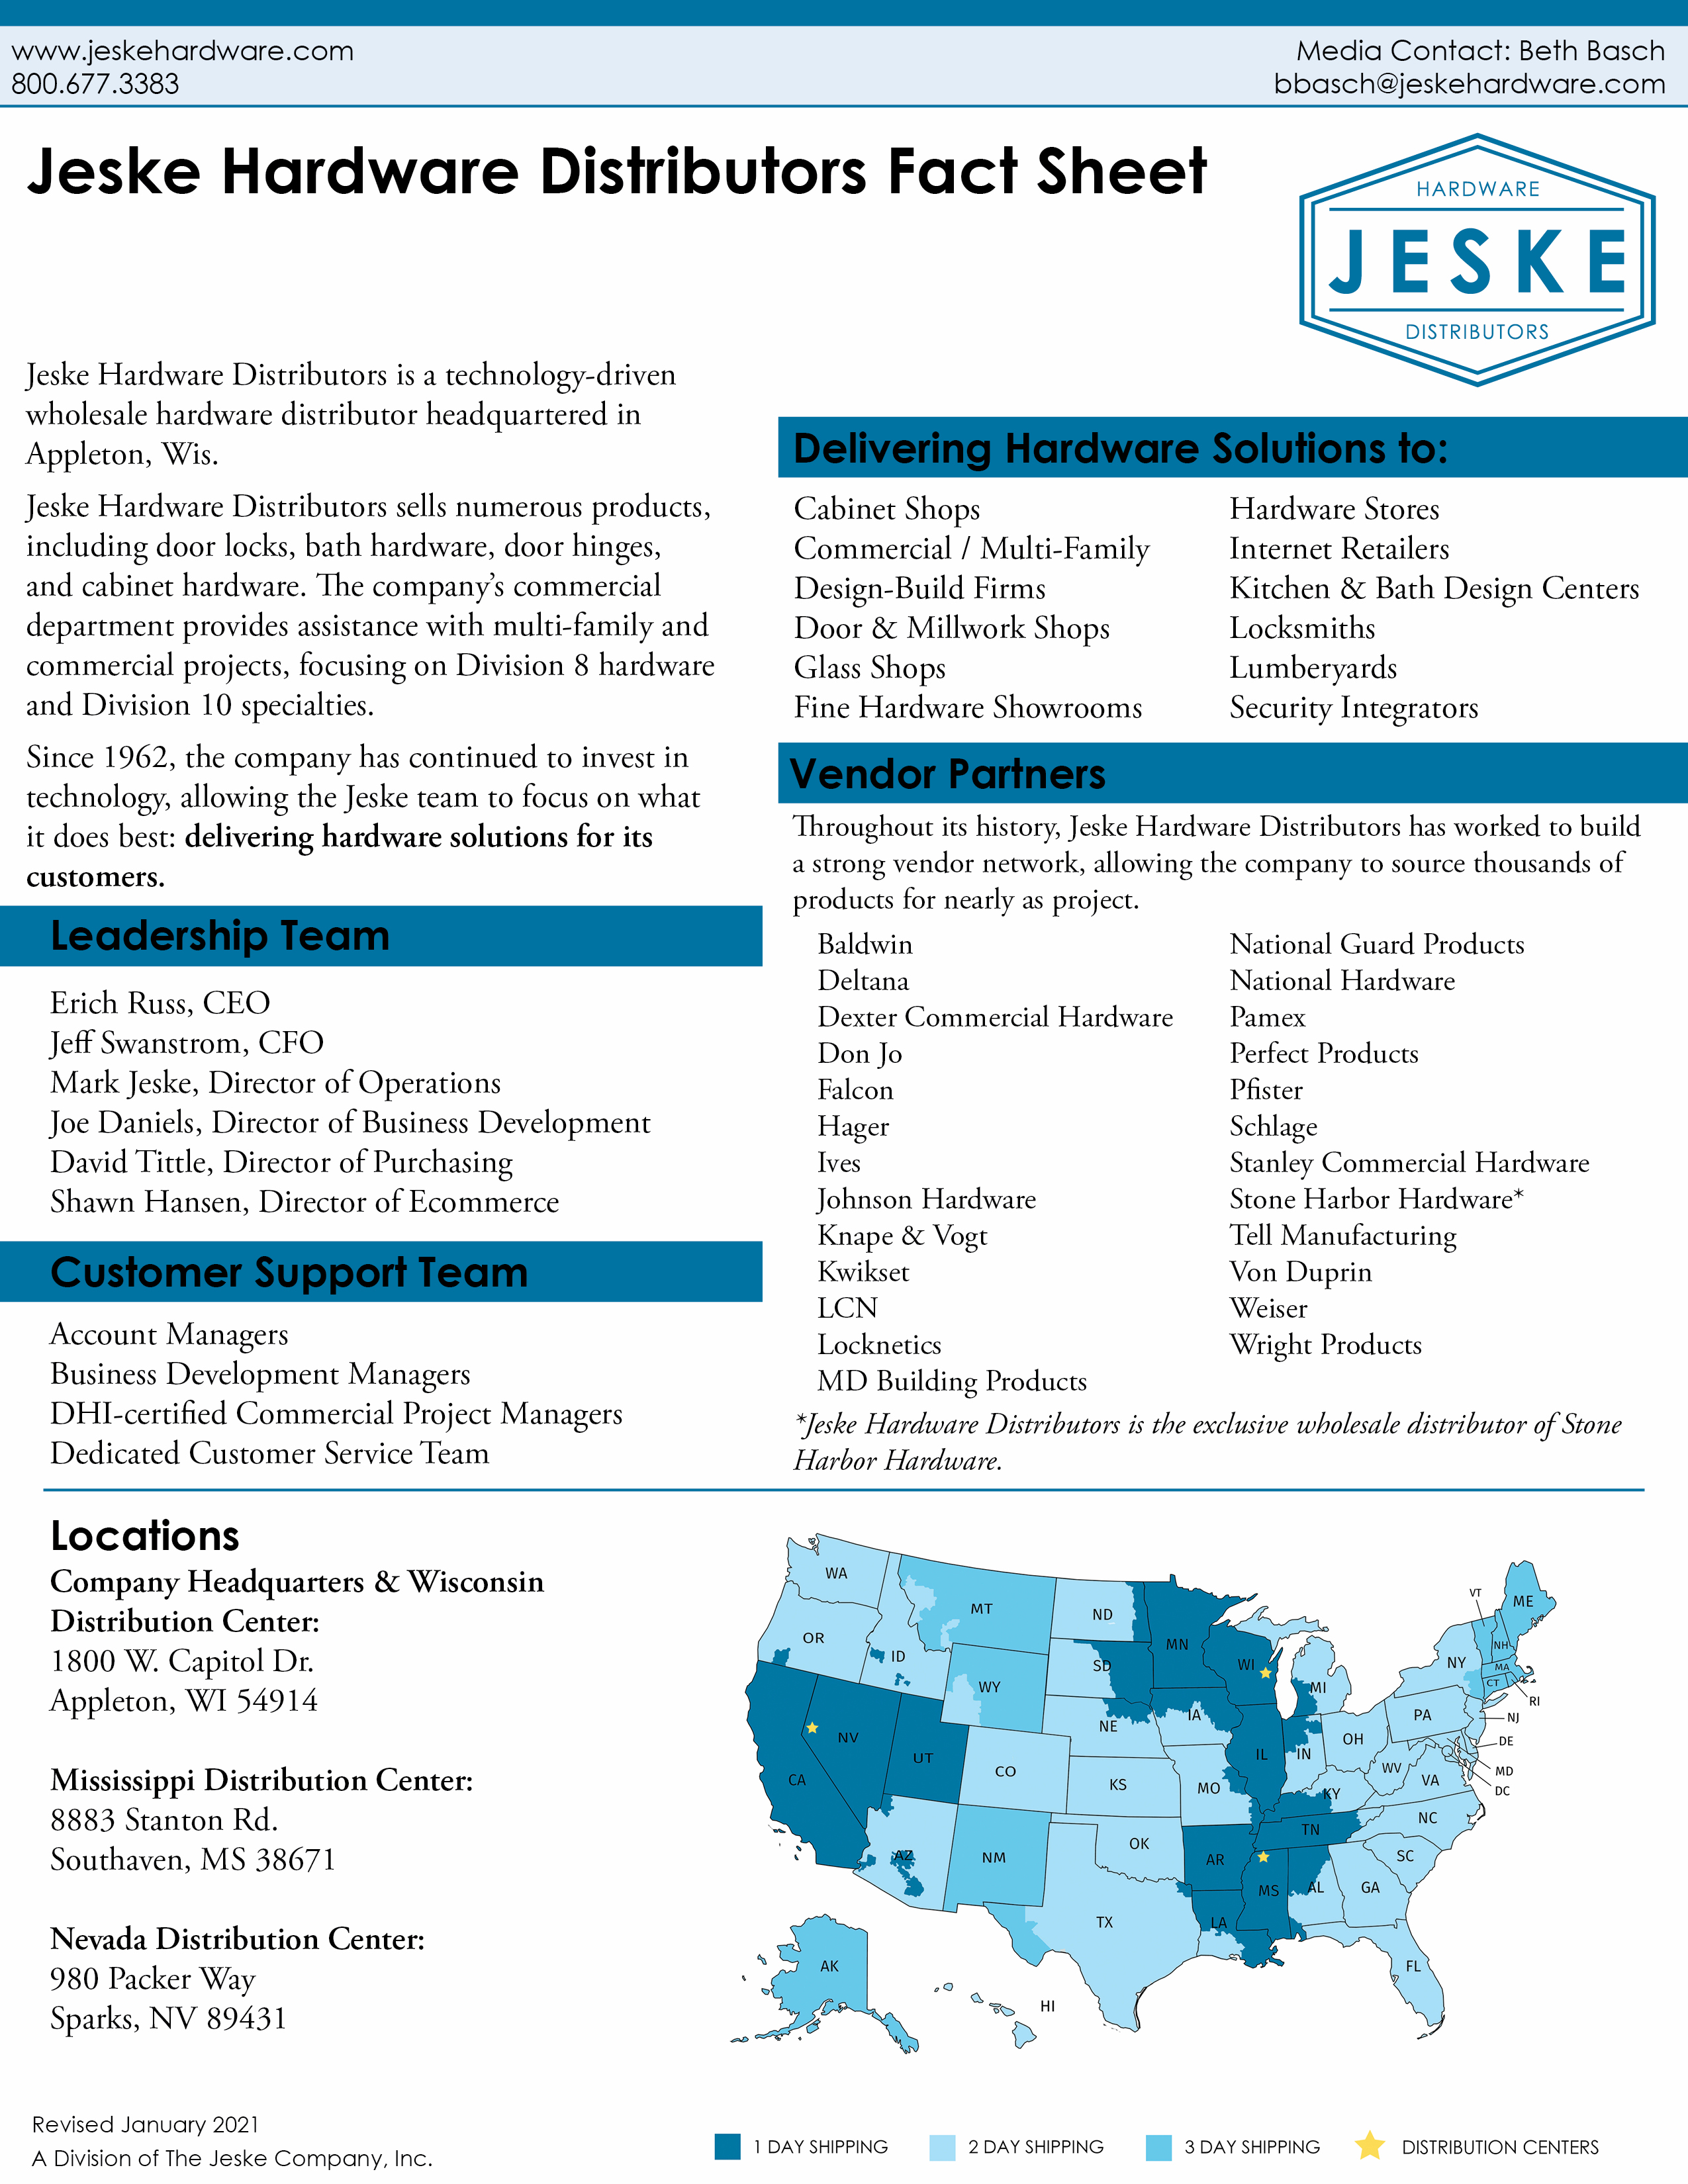 Jeske Hardware Distributors fact sheet